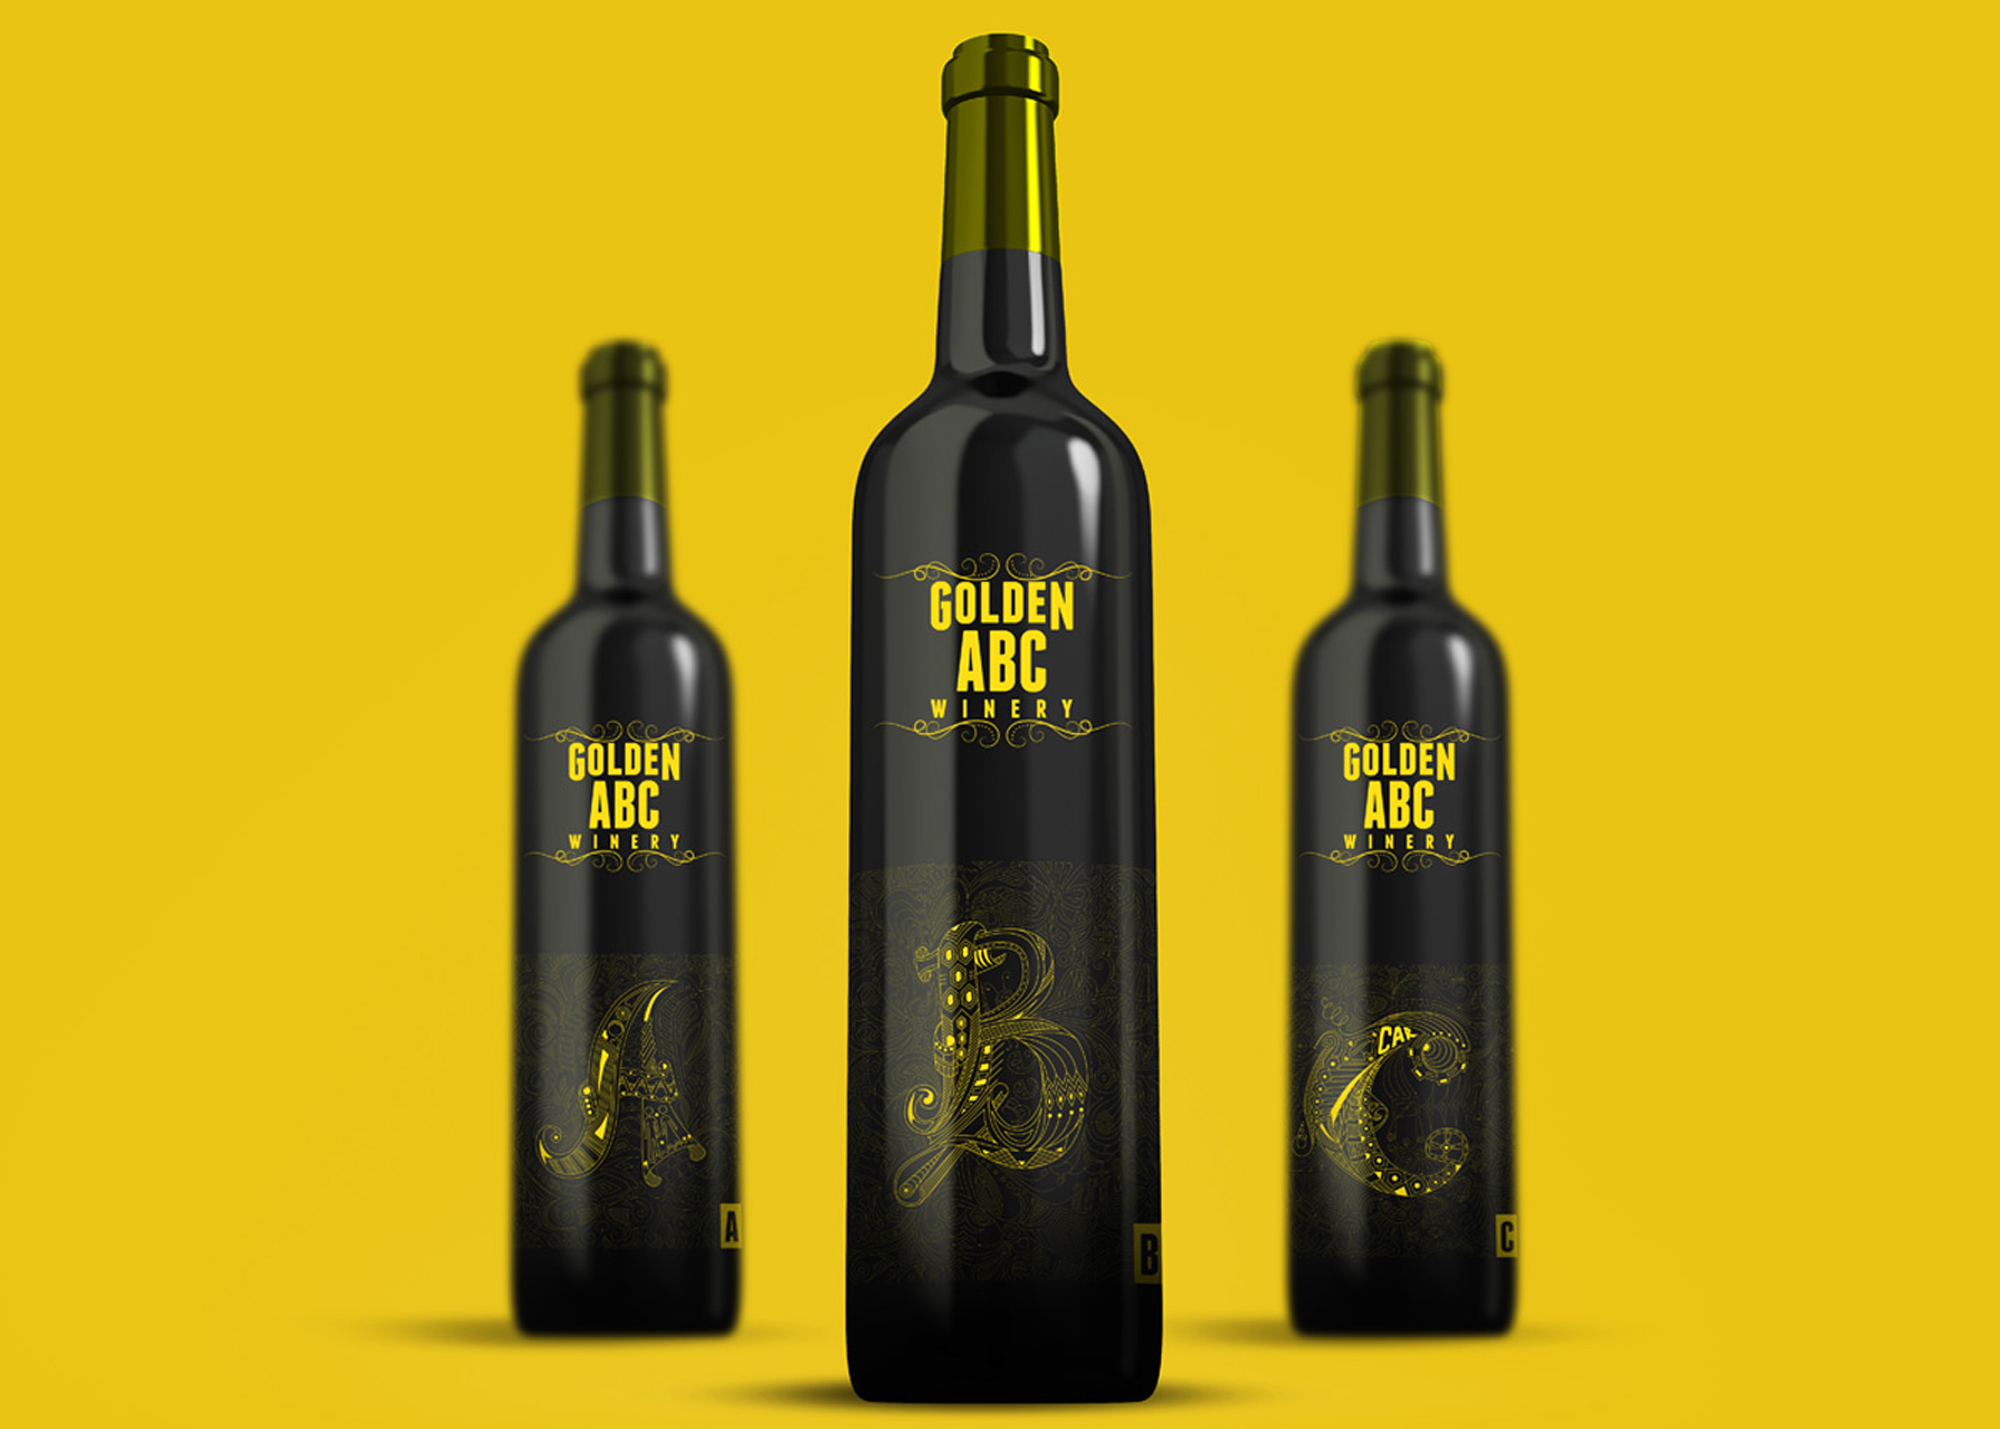 Golden ABC Winery